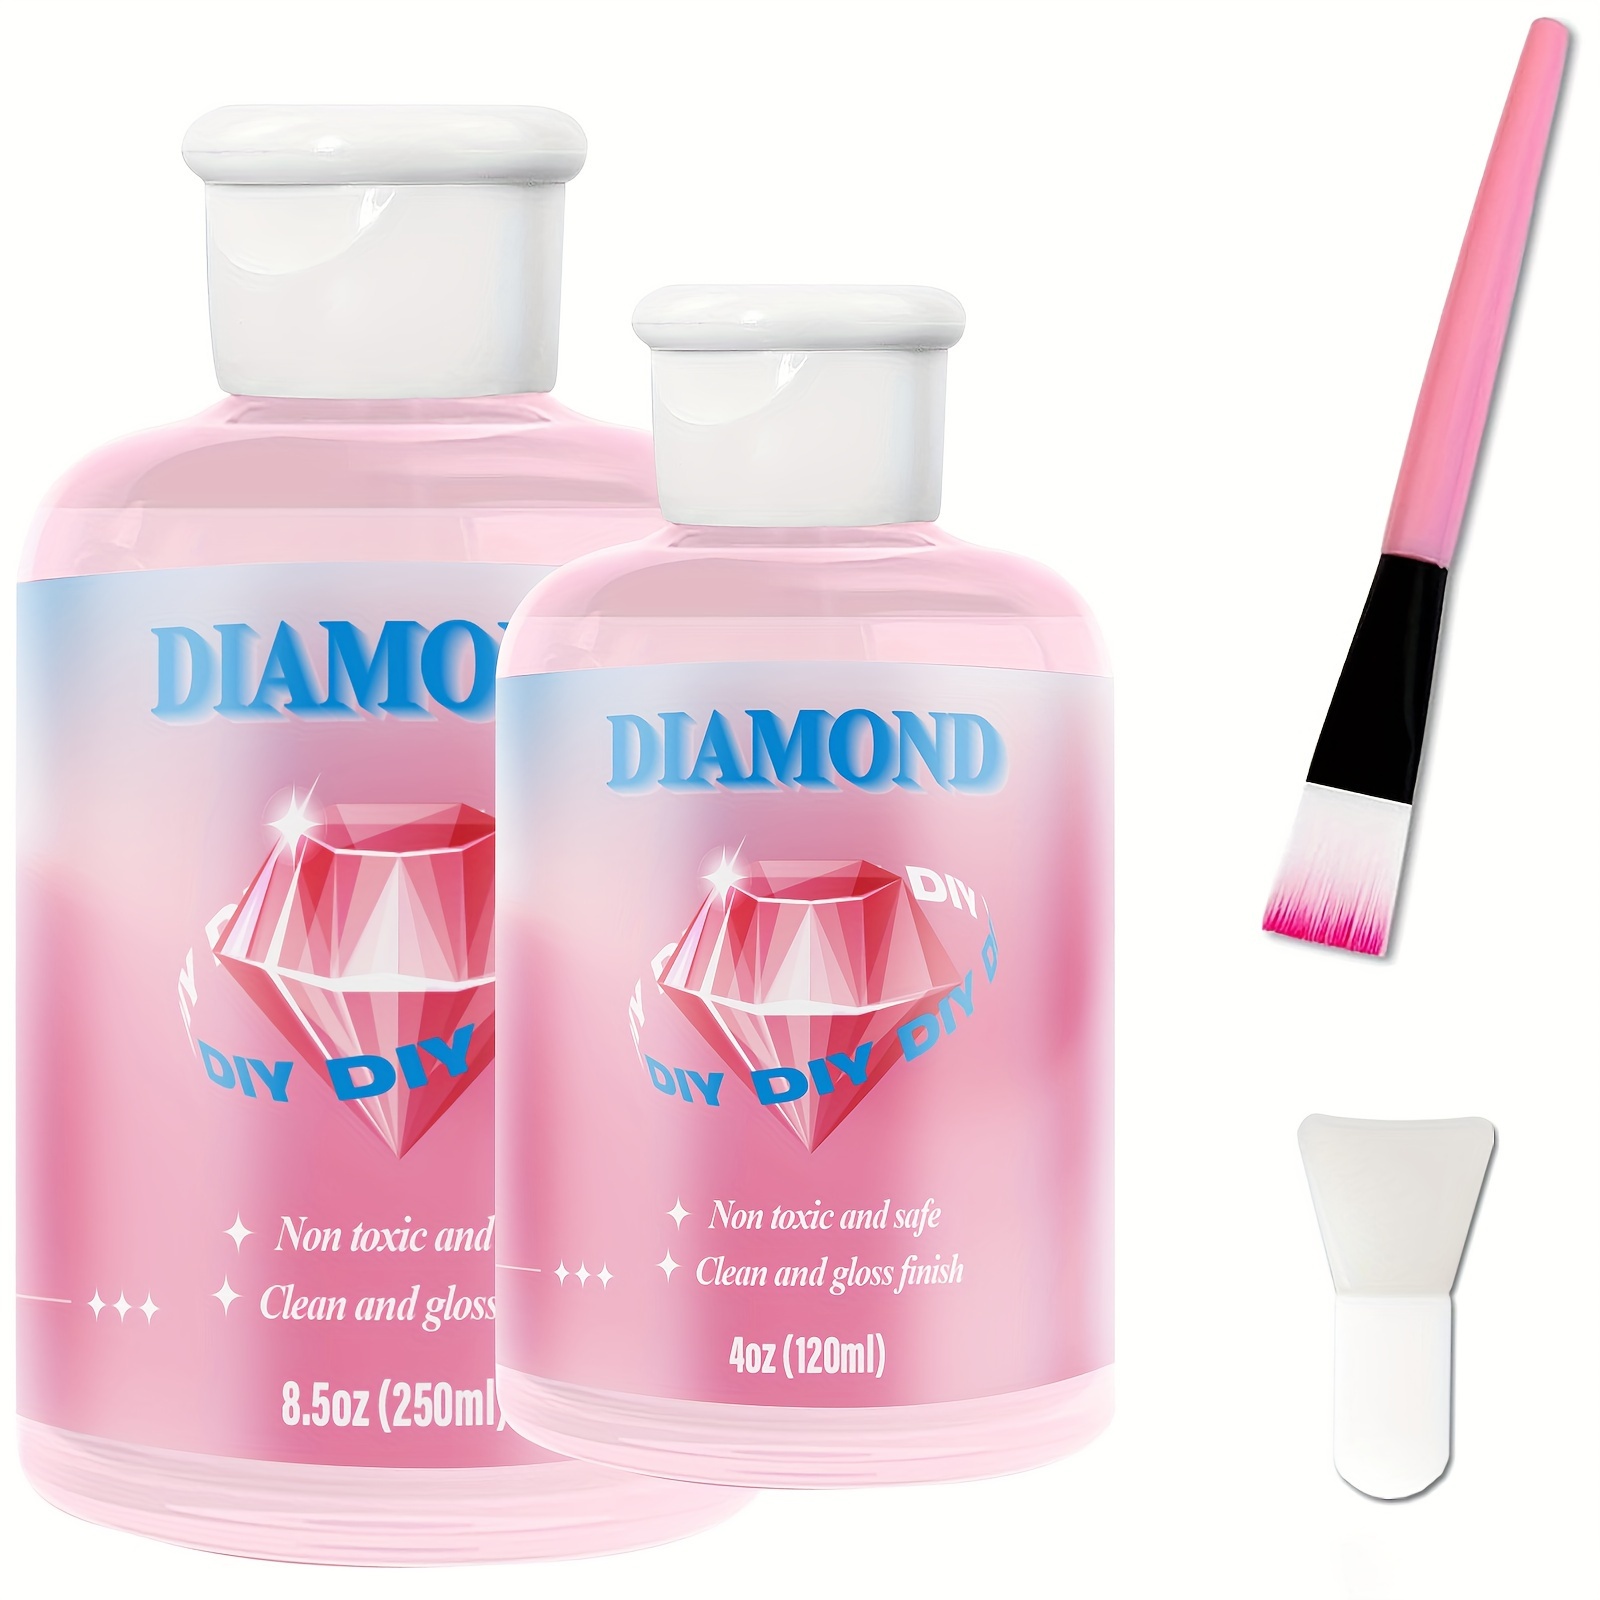 Diamond Painting Sealer Kits Upgrade Formula Brushes Diamond - Temu